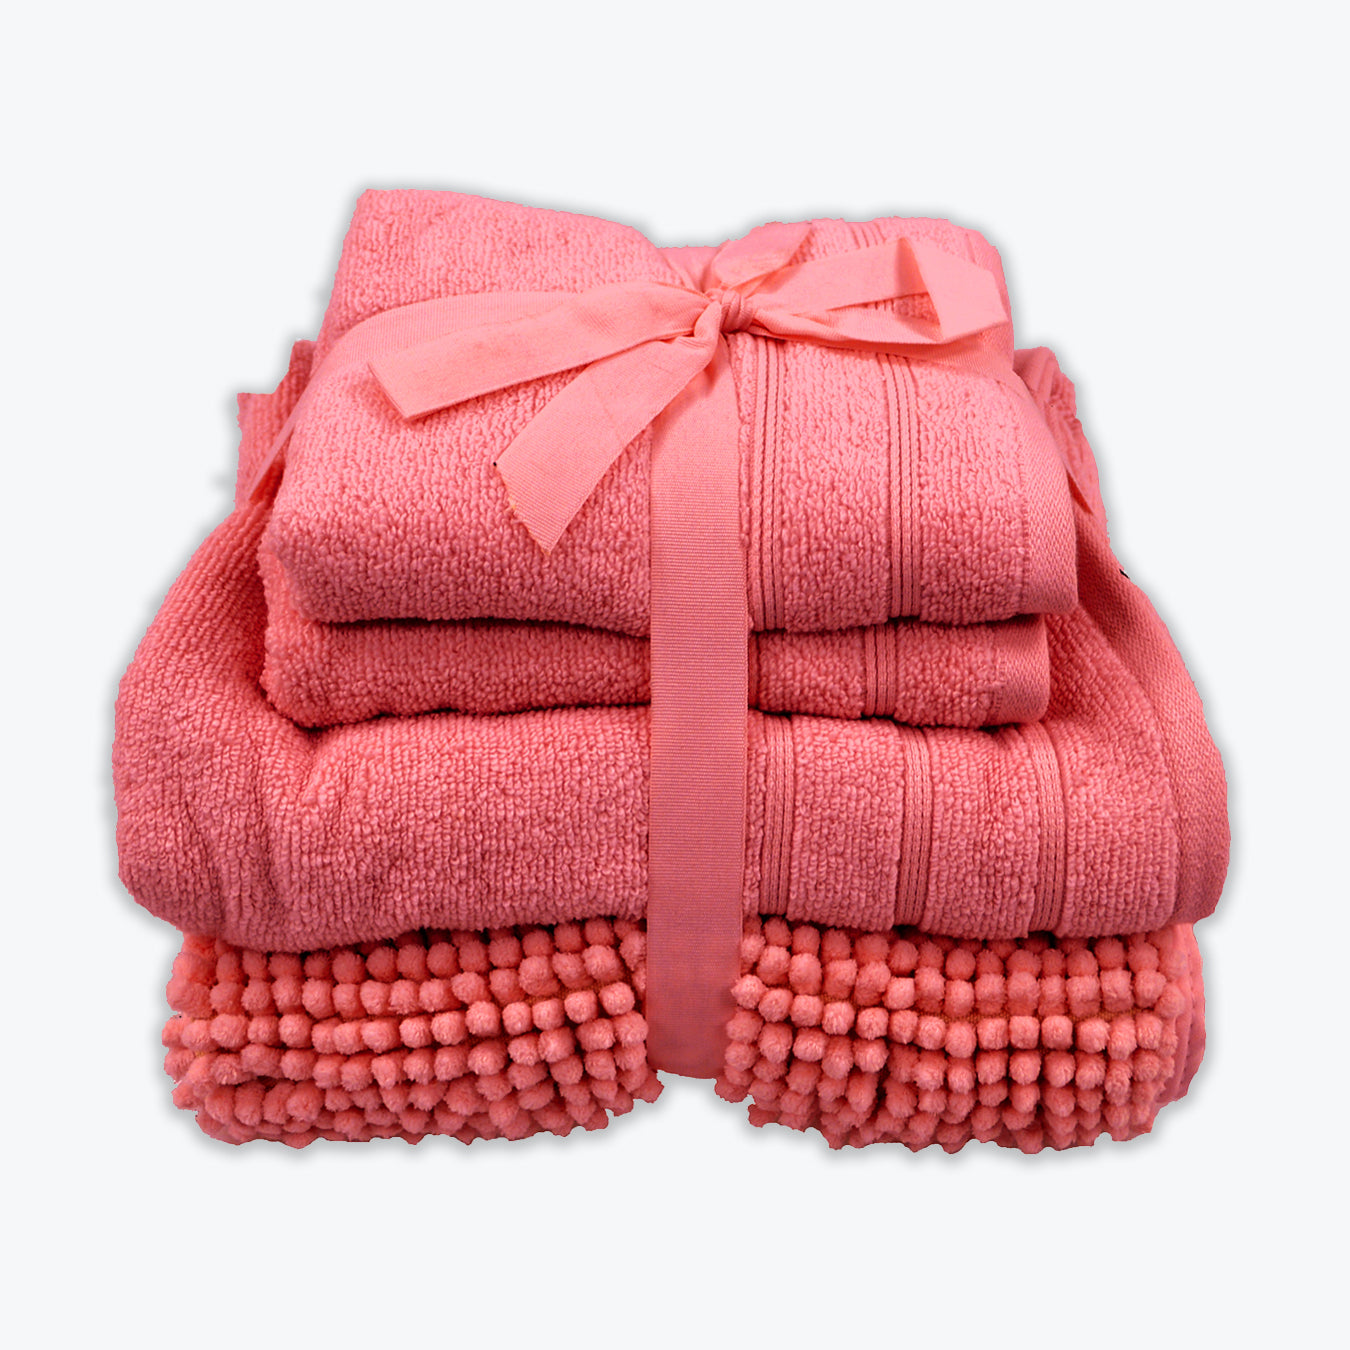 Rose Pink Bath Mat and Towels Bathroom Set - Luxury 4pc Bale